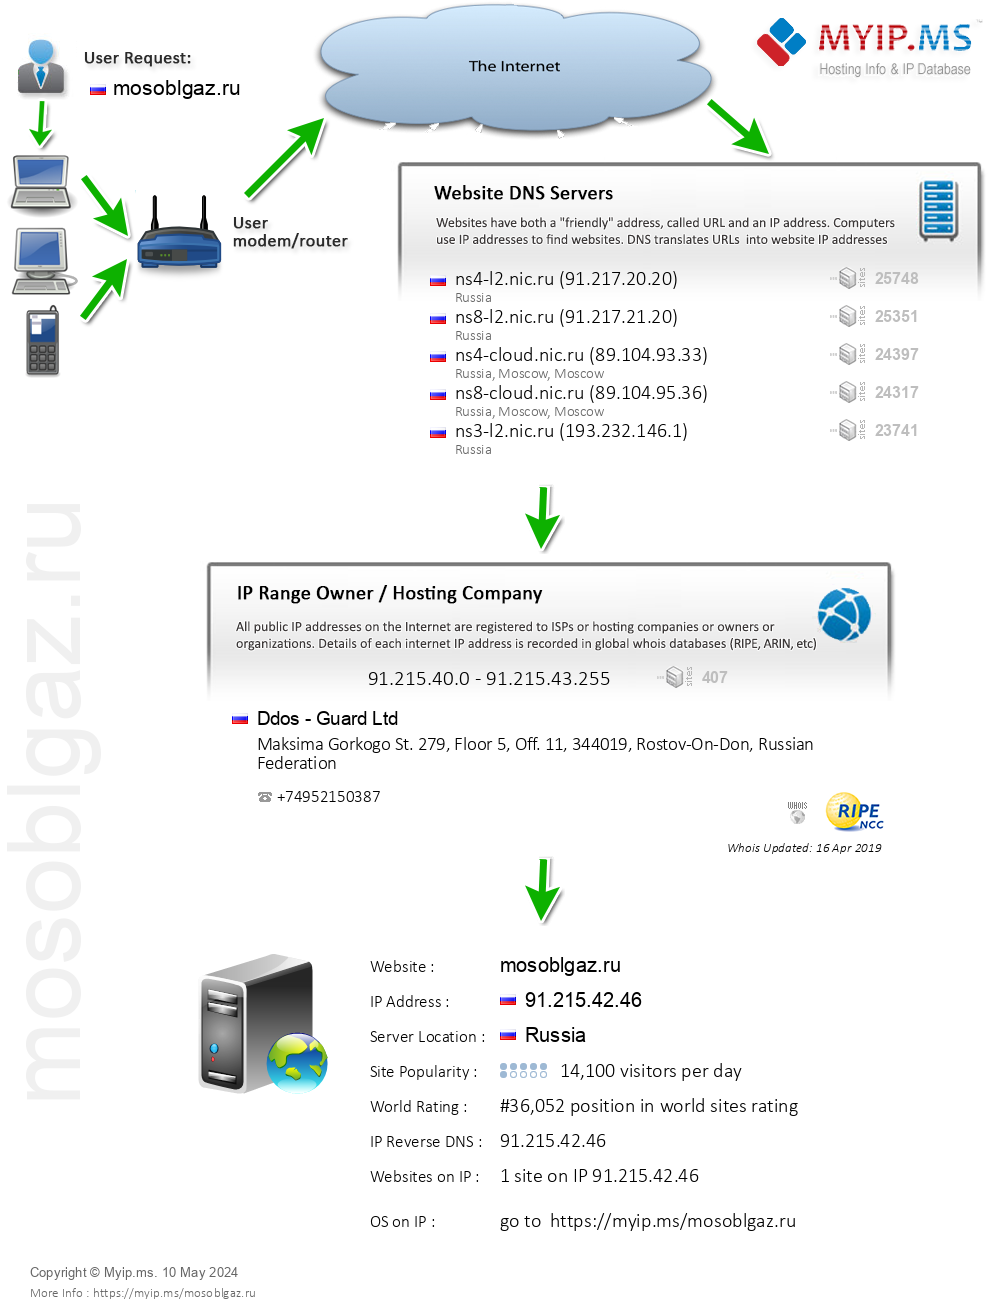 Mosoblgaz.ru - Website Hosting Visual IP Diagram